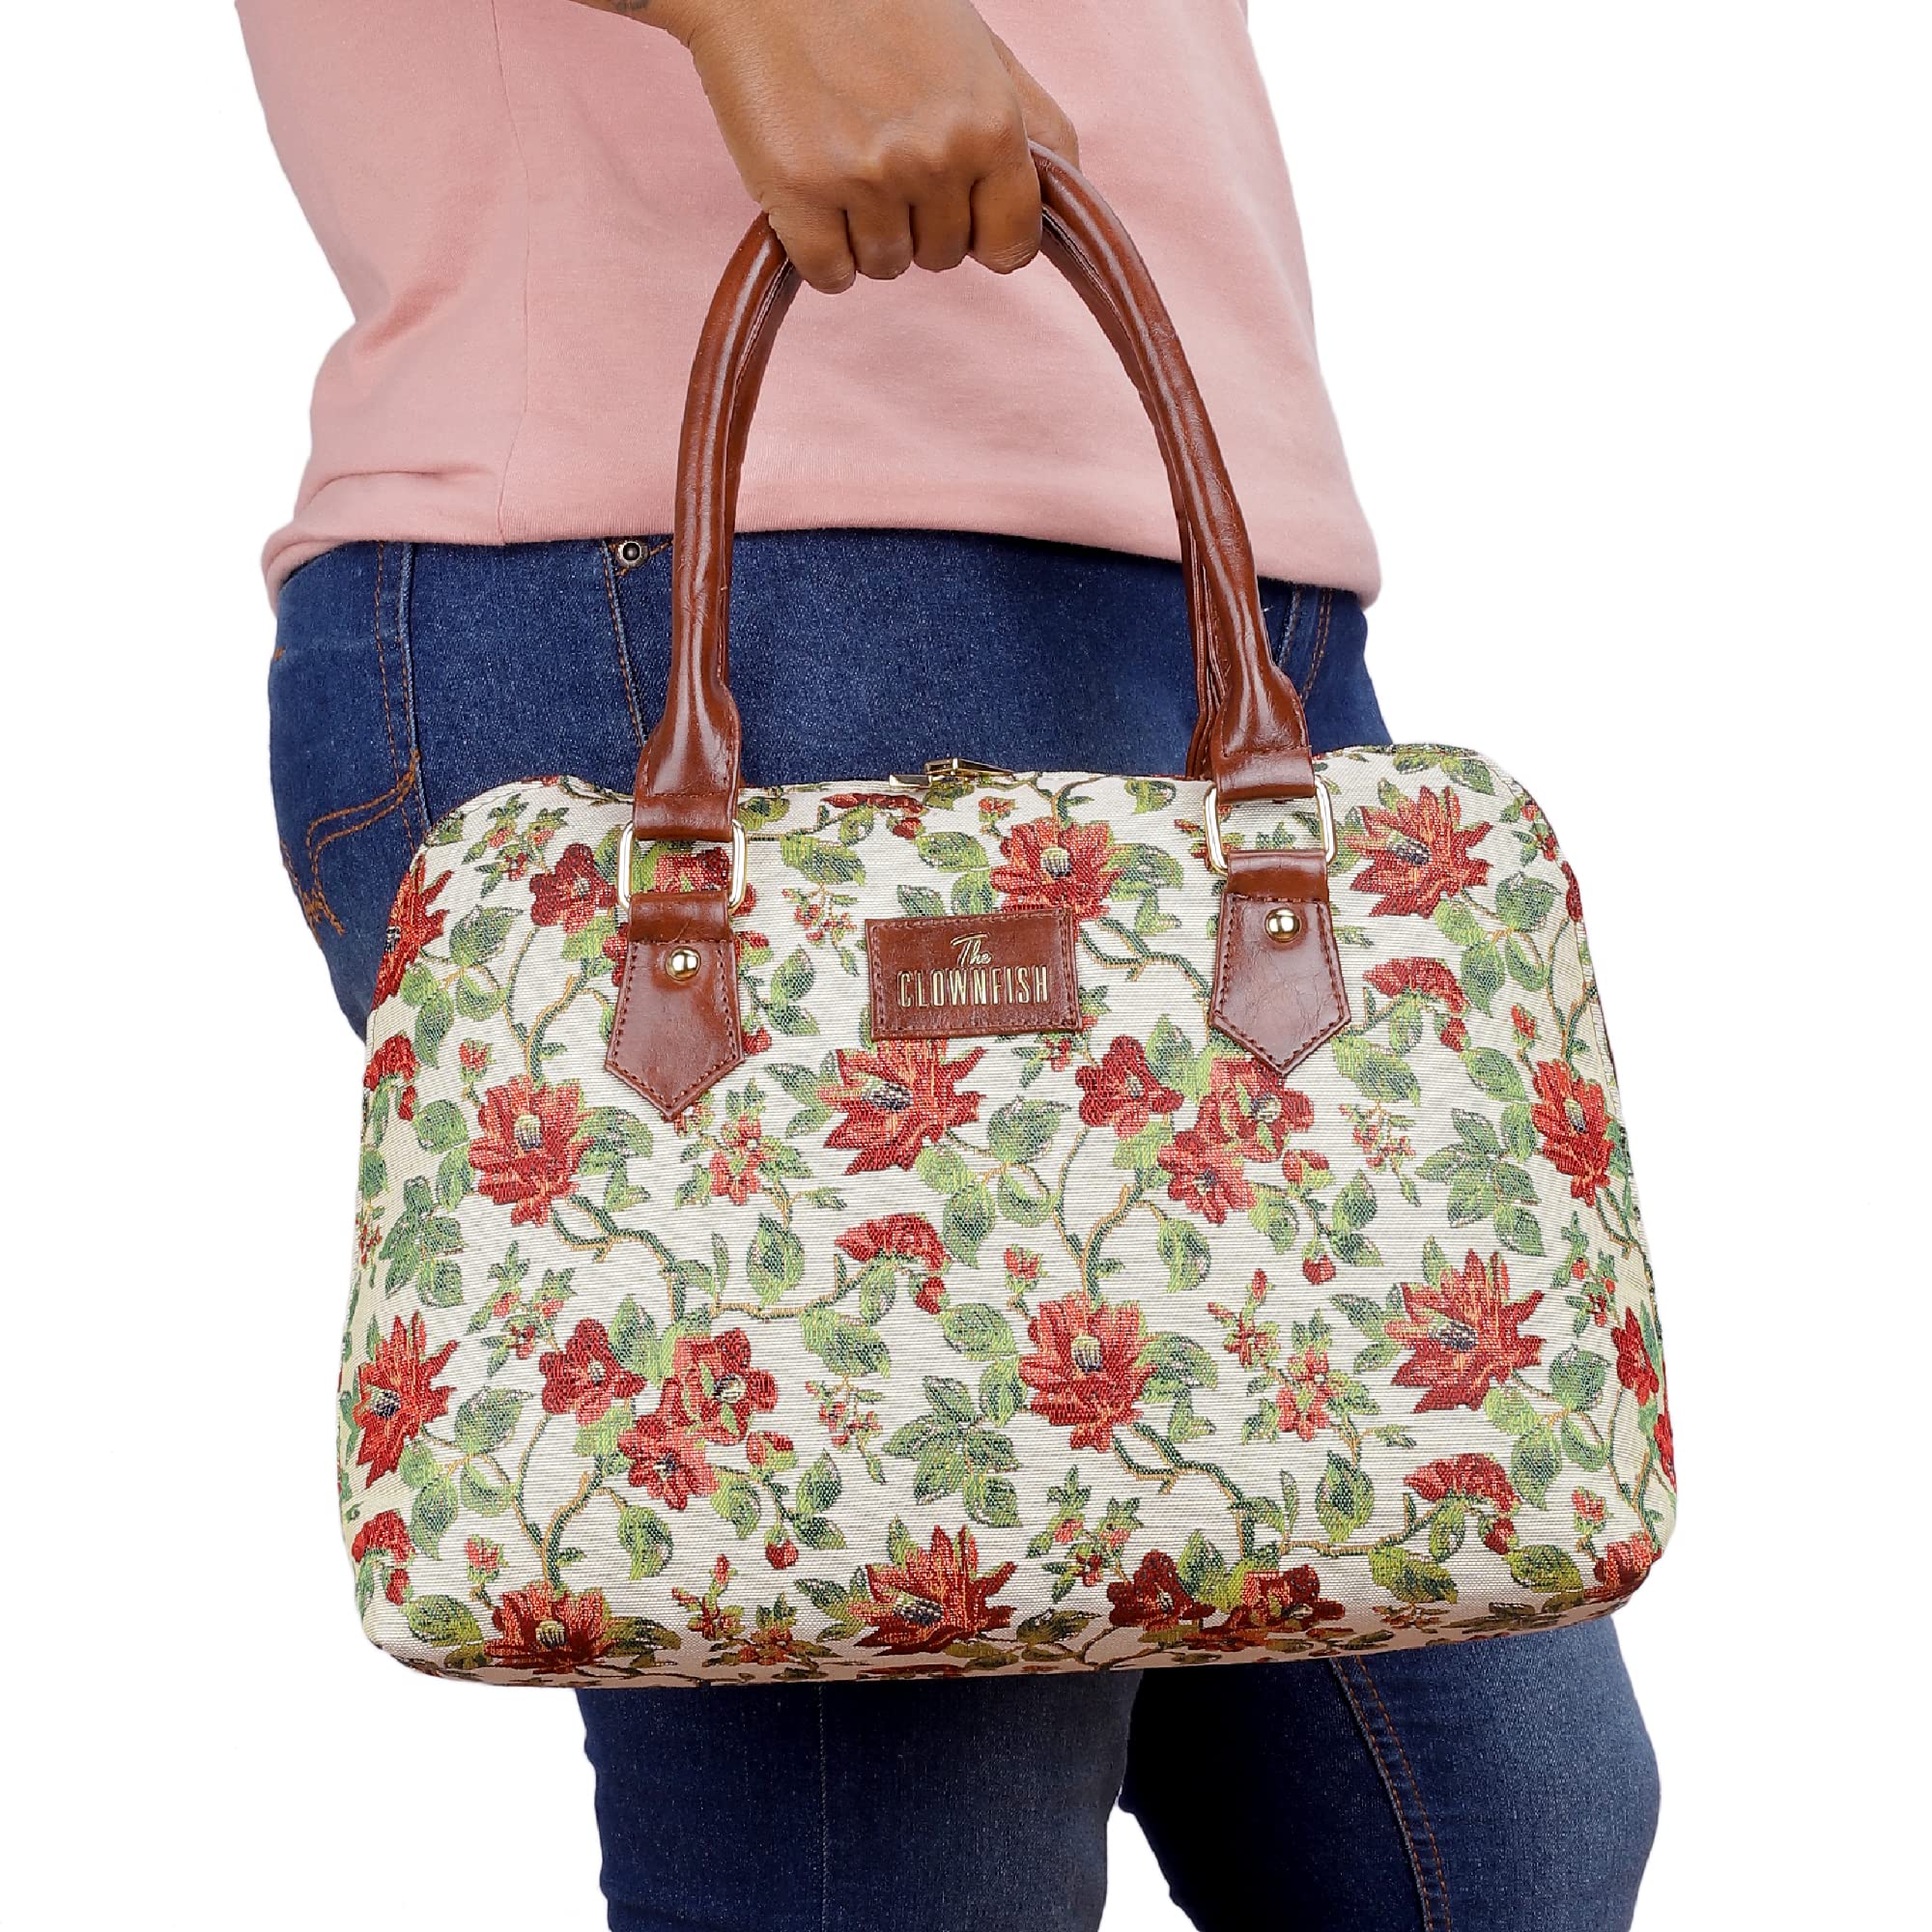 Clearance Purses and Handbags for WomenWomen Ladies Girls Fashion Wallets  Long Zip Handbag Casual Office Bags - Walmart.com